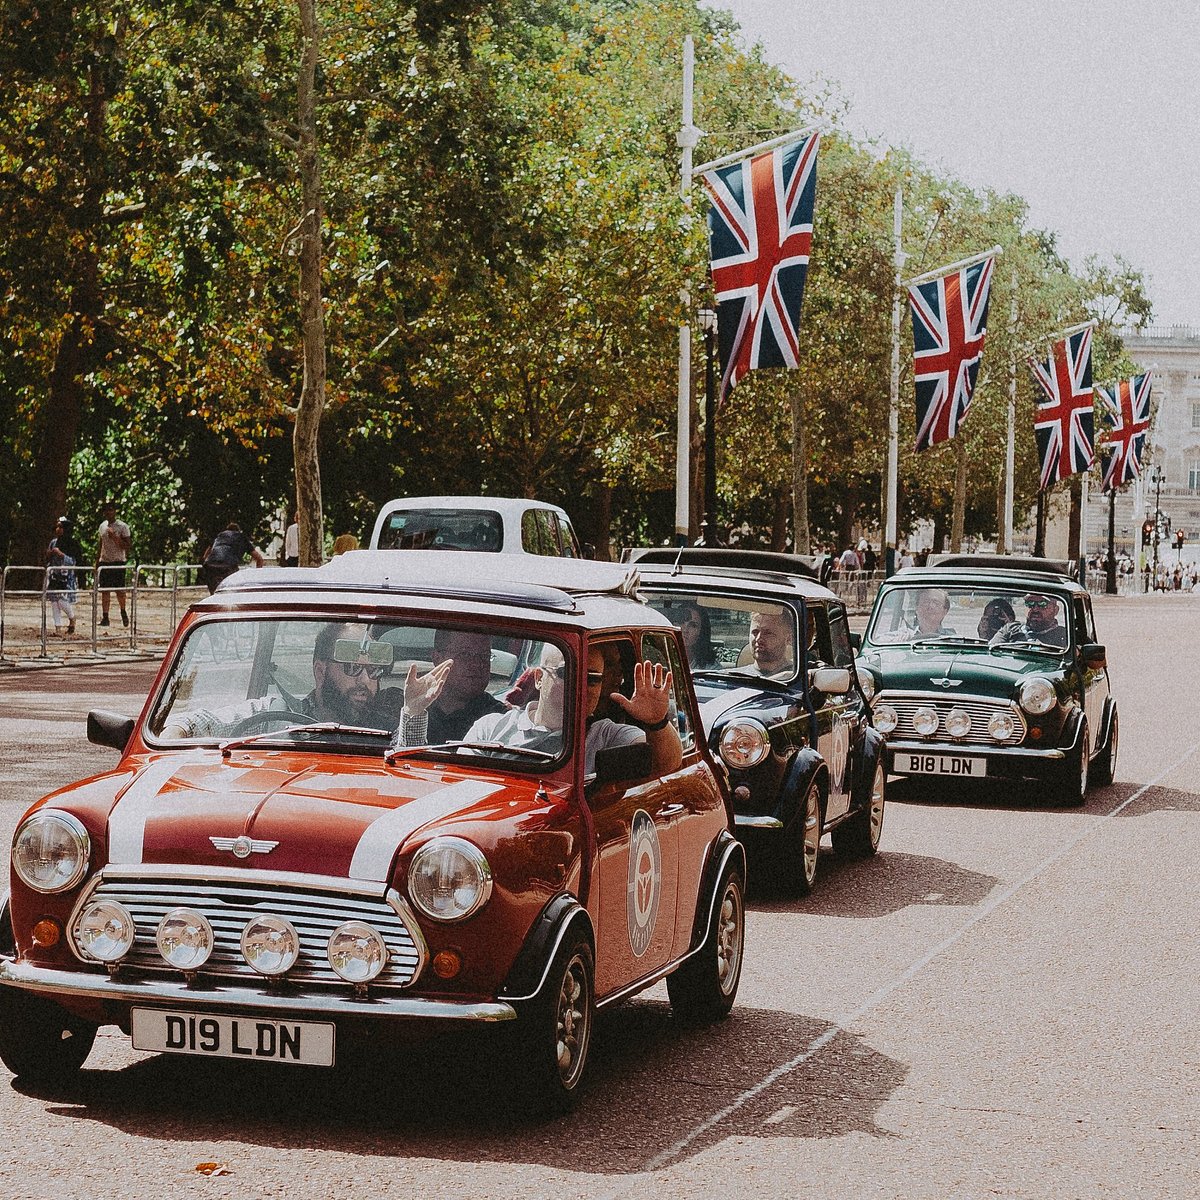 Classic Mini Cooper Hire in London - Meet Dot